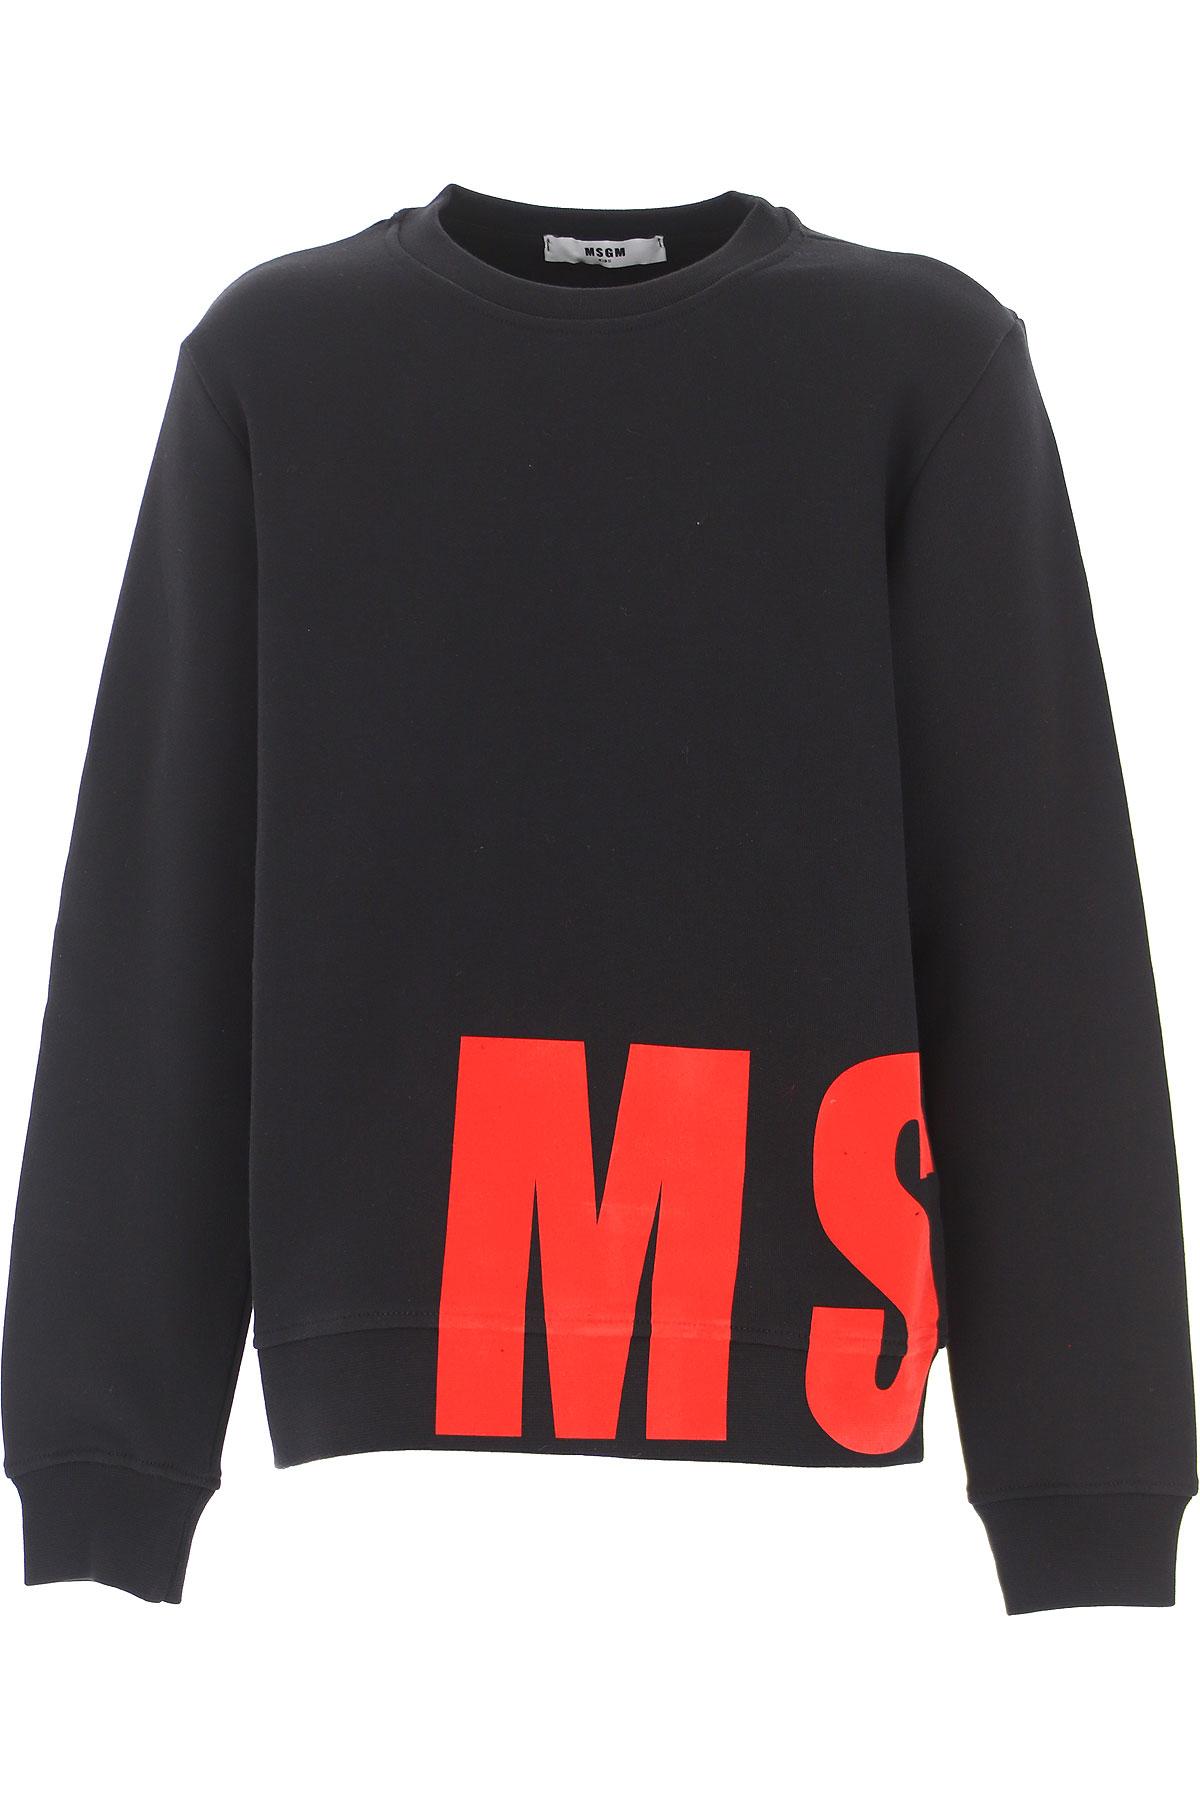 Kidswear MSGM, Style code: 025654-110-